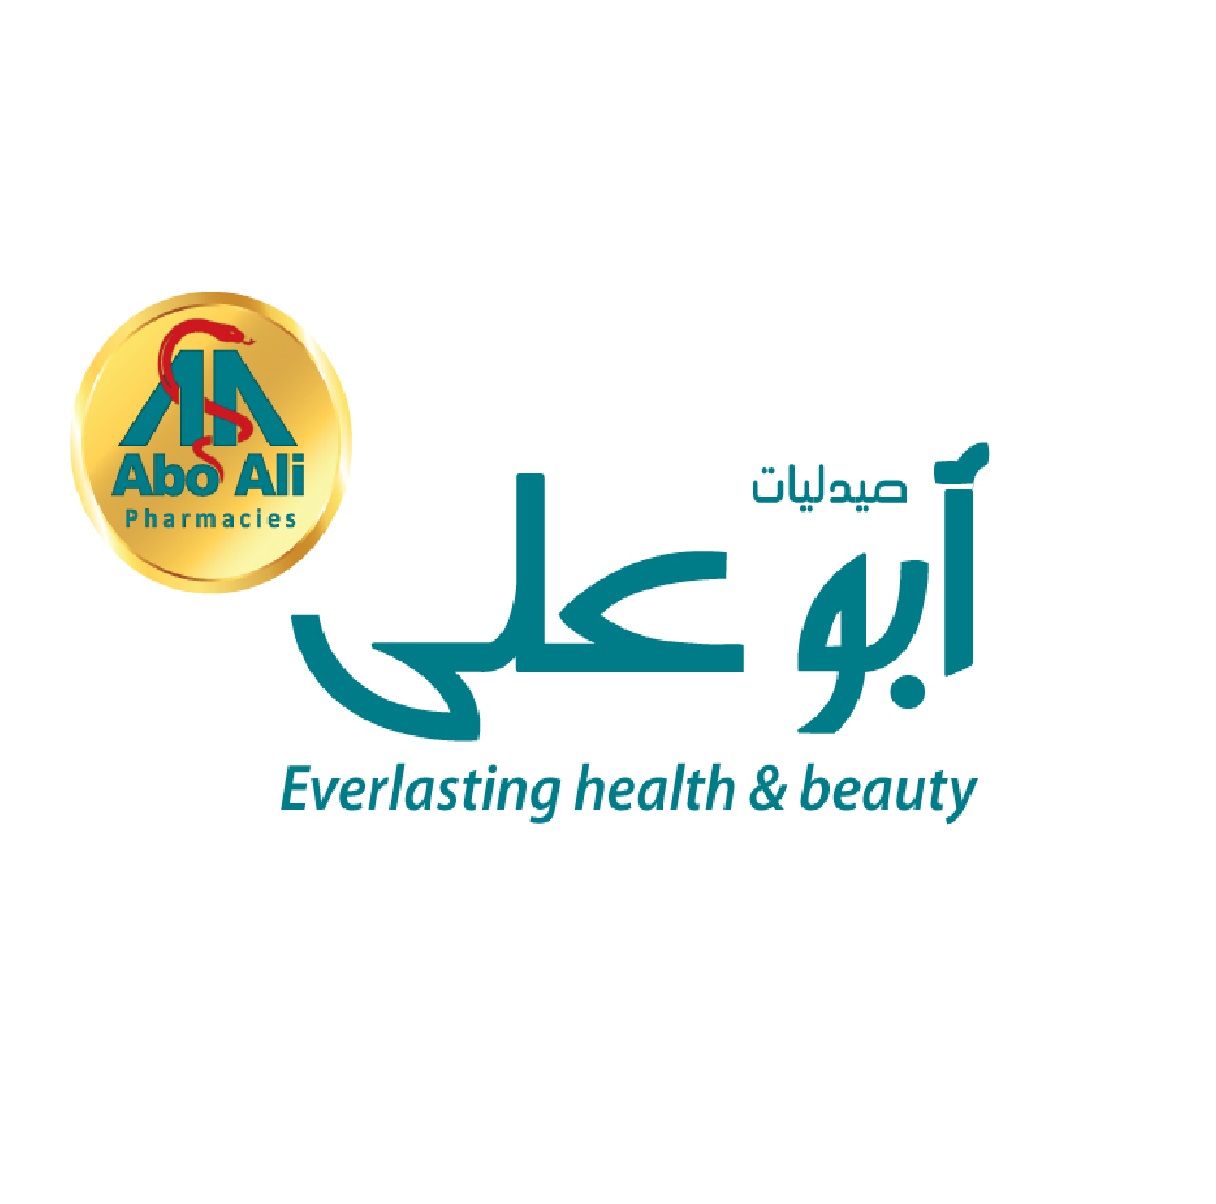 Abo Ali Pharmacies Group